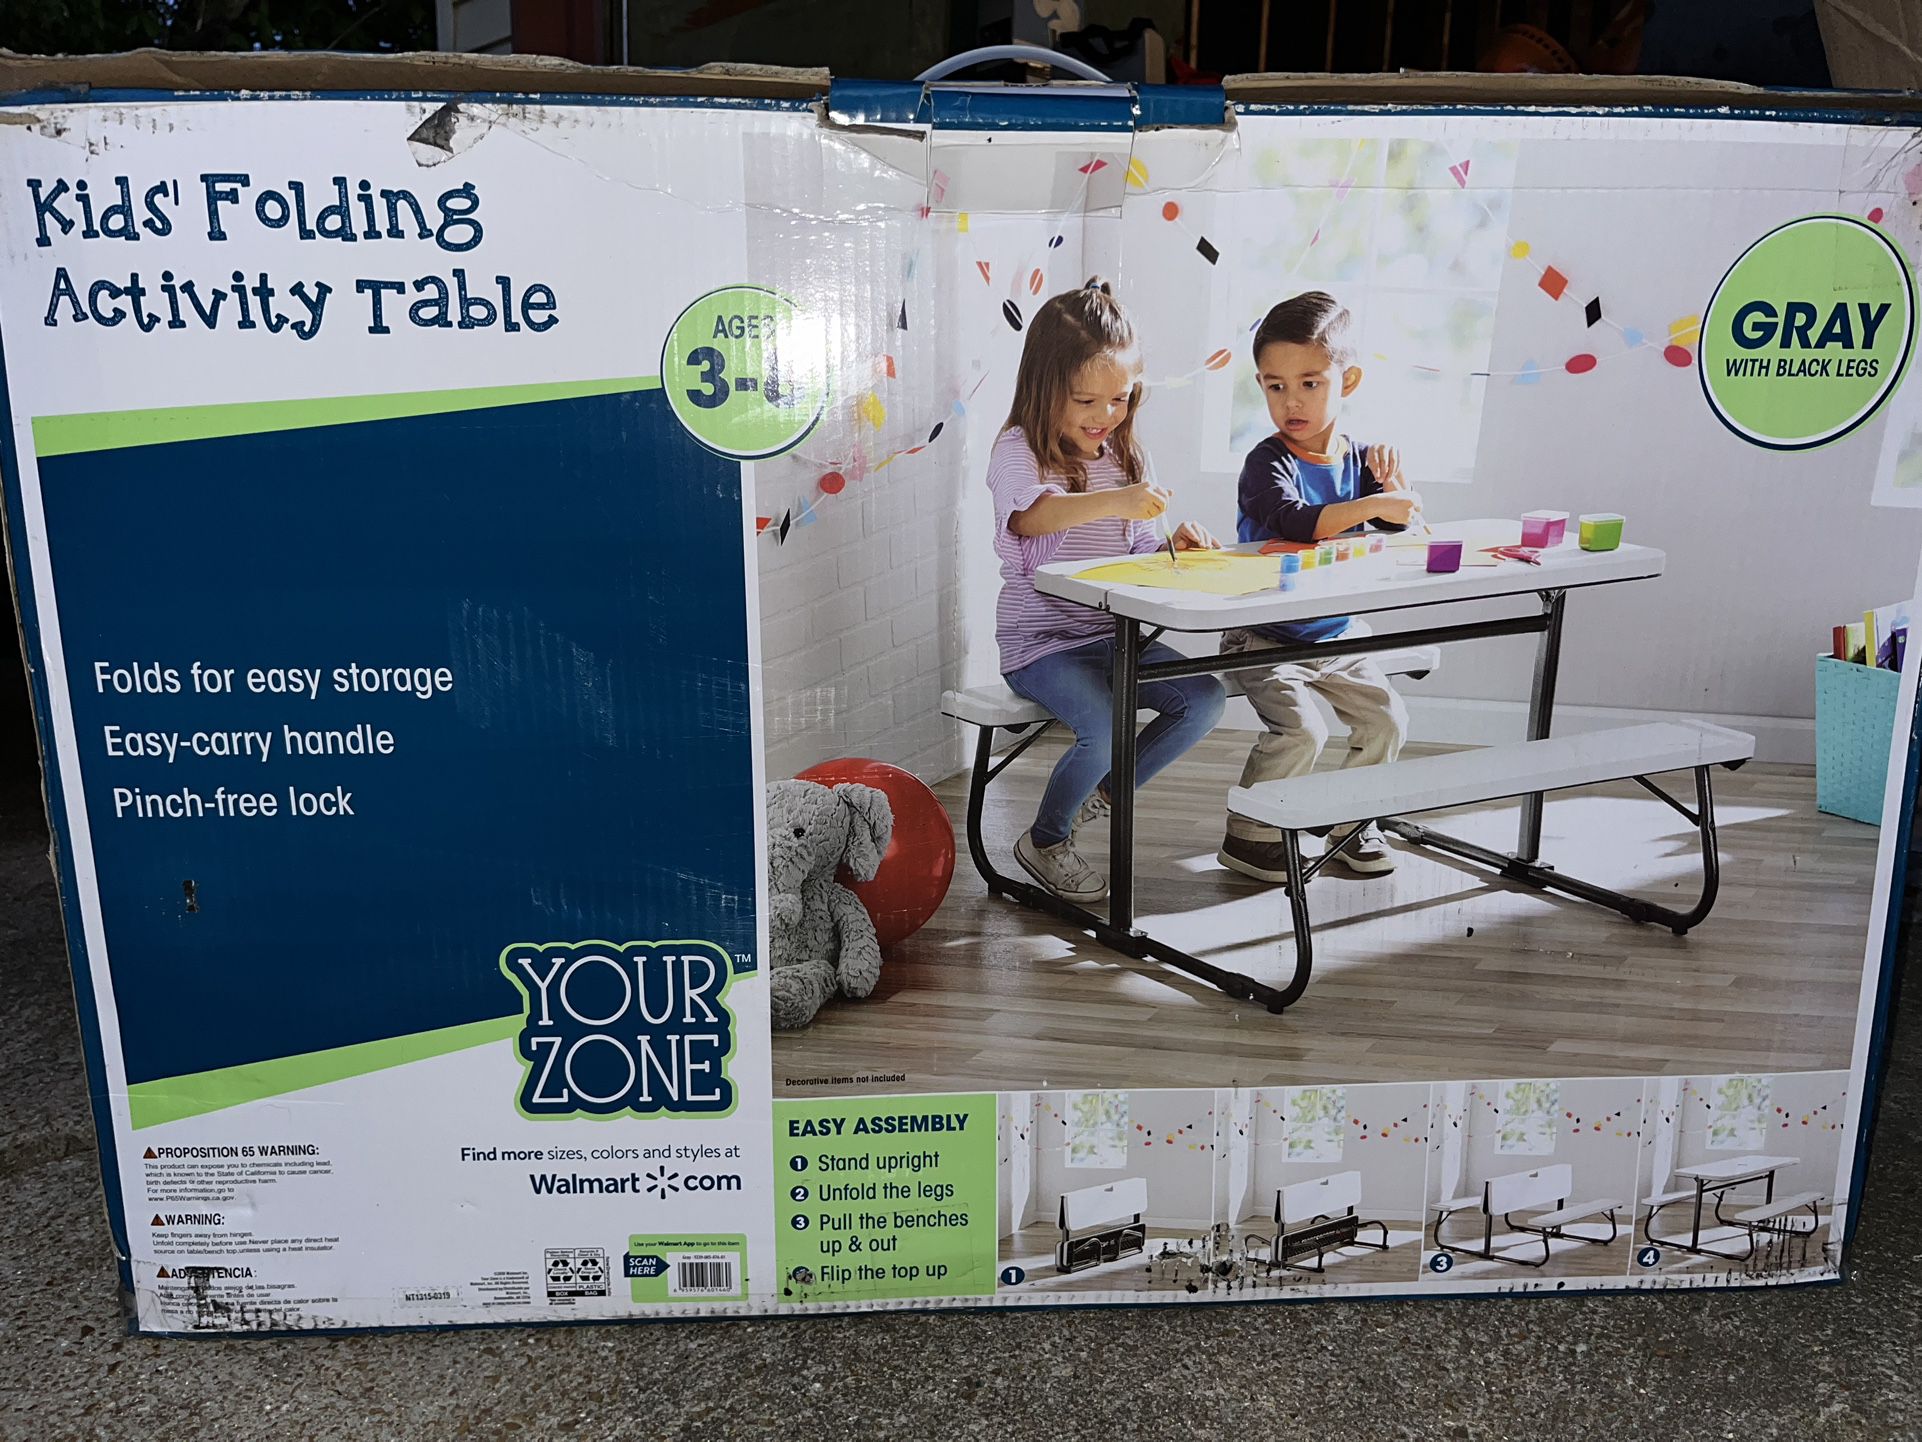 Kids Folding Activity Table